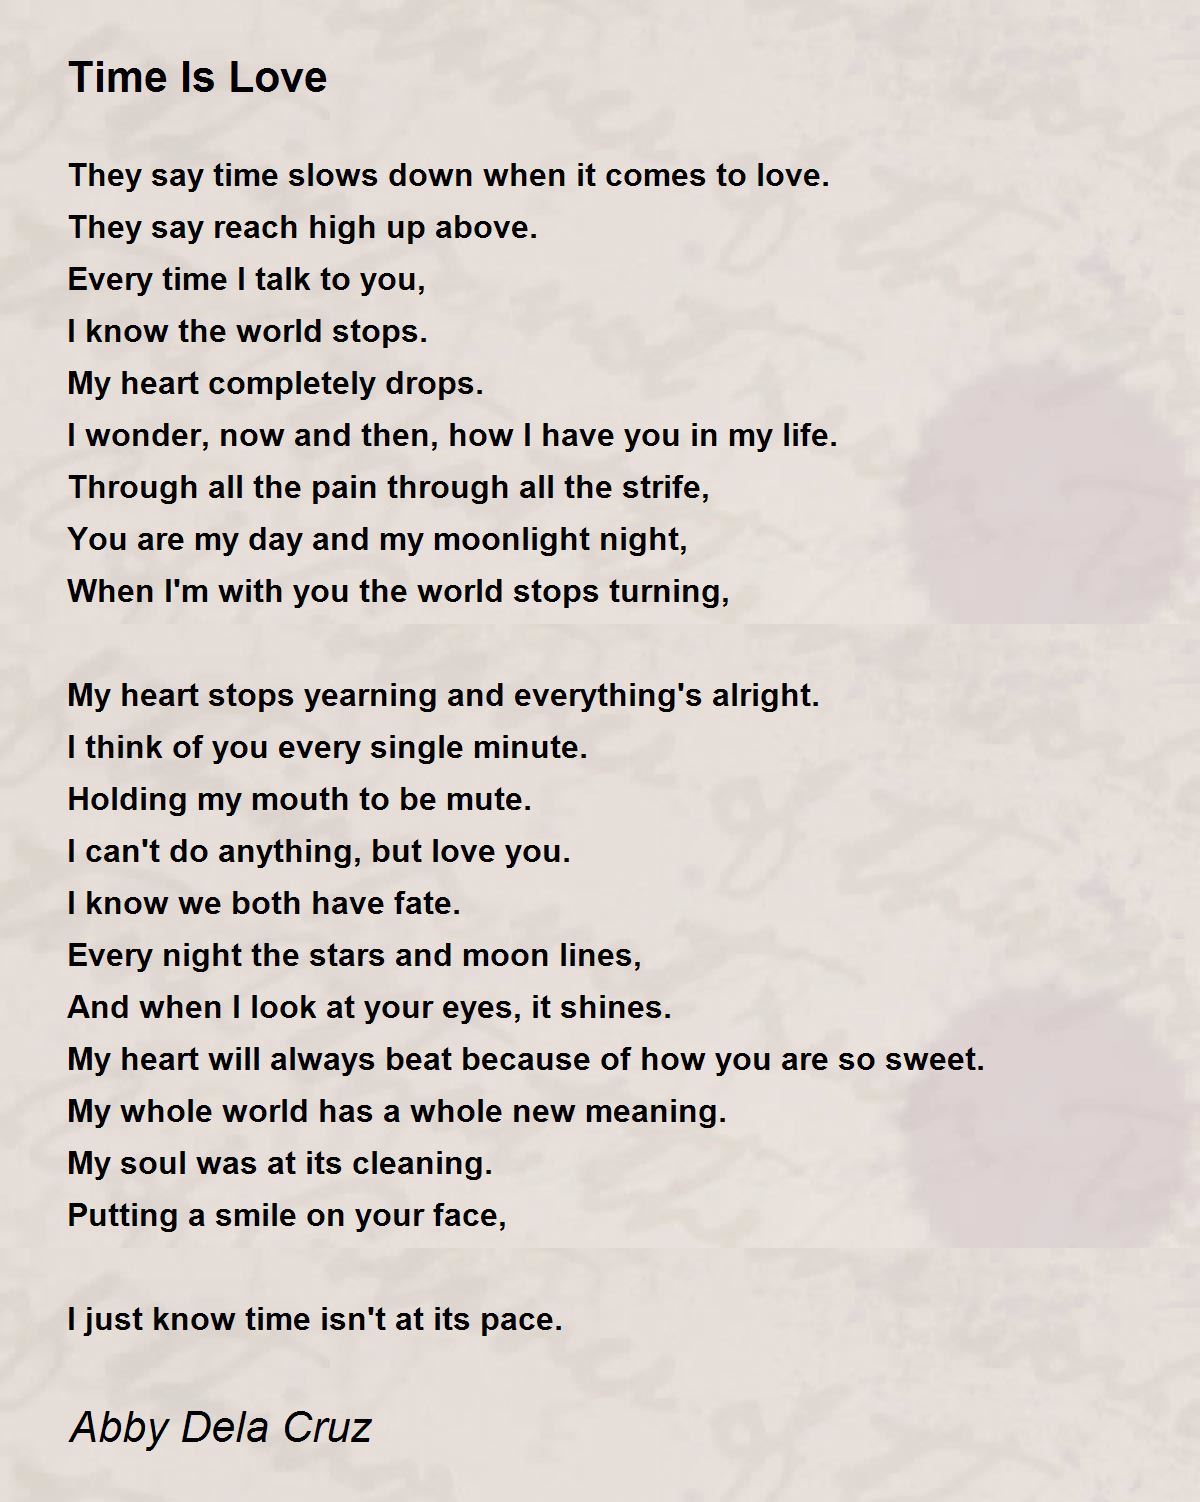 Time Is Love - Is Love Poem Abby Dela Cruz